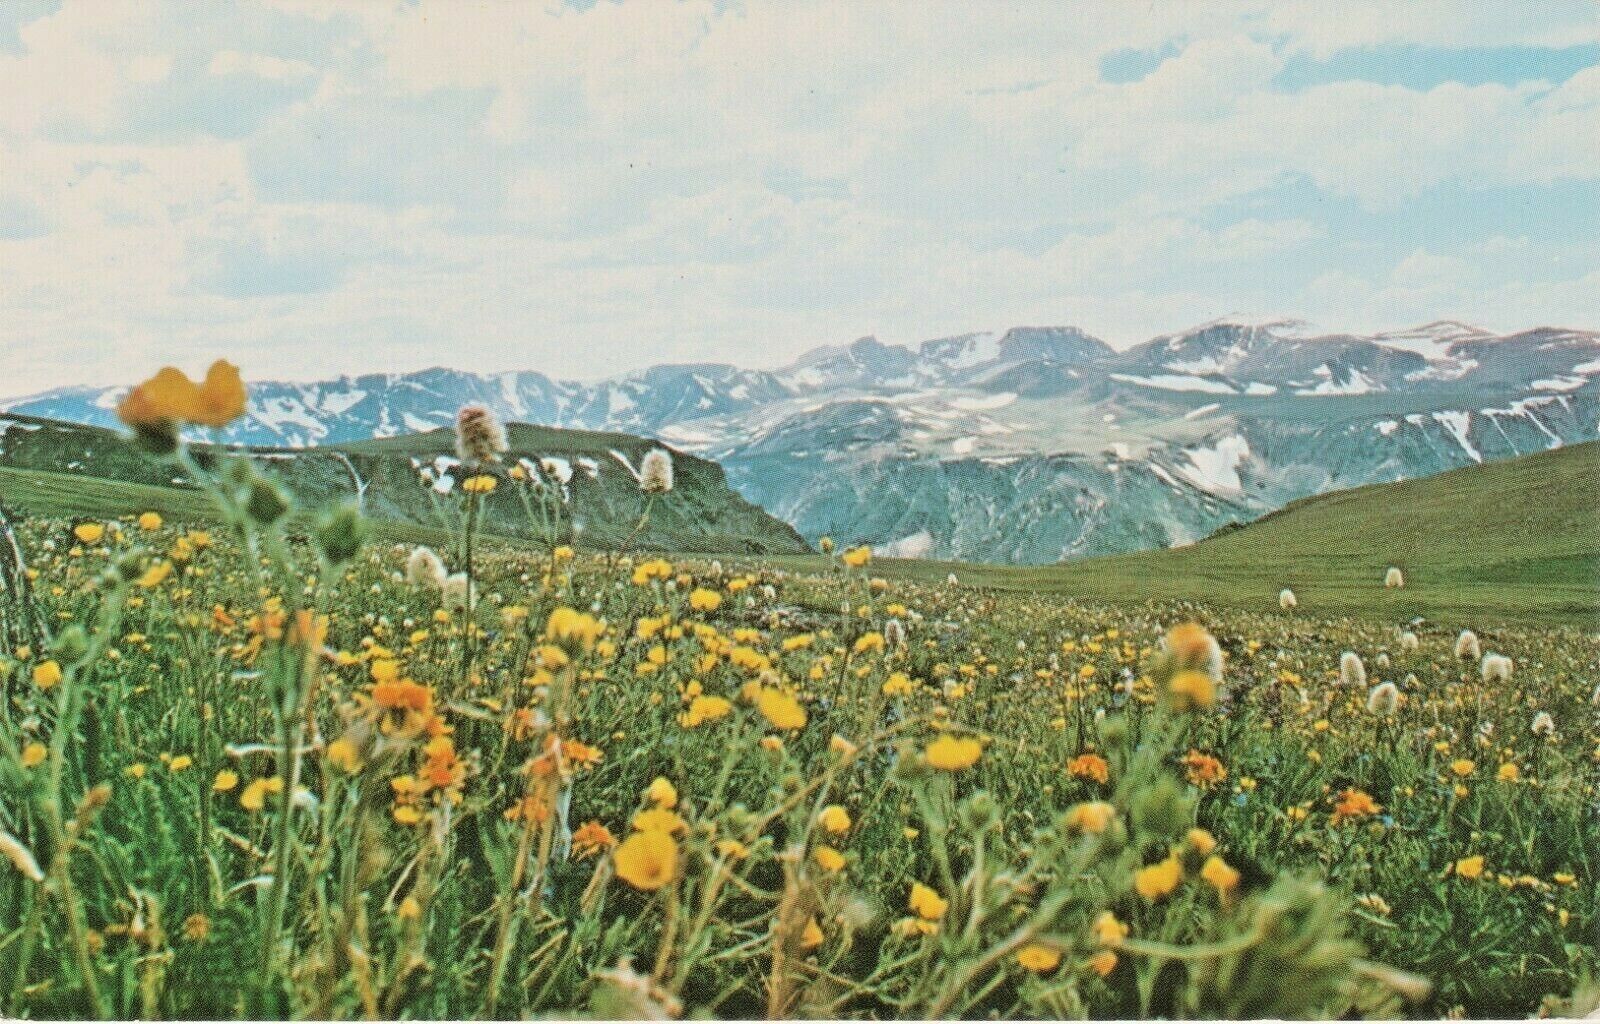 Alpine Wild Flowers near Scenic North East Entrance to Yellowstone Park, Montana